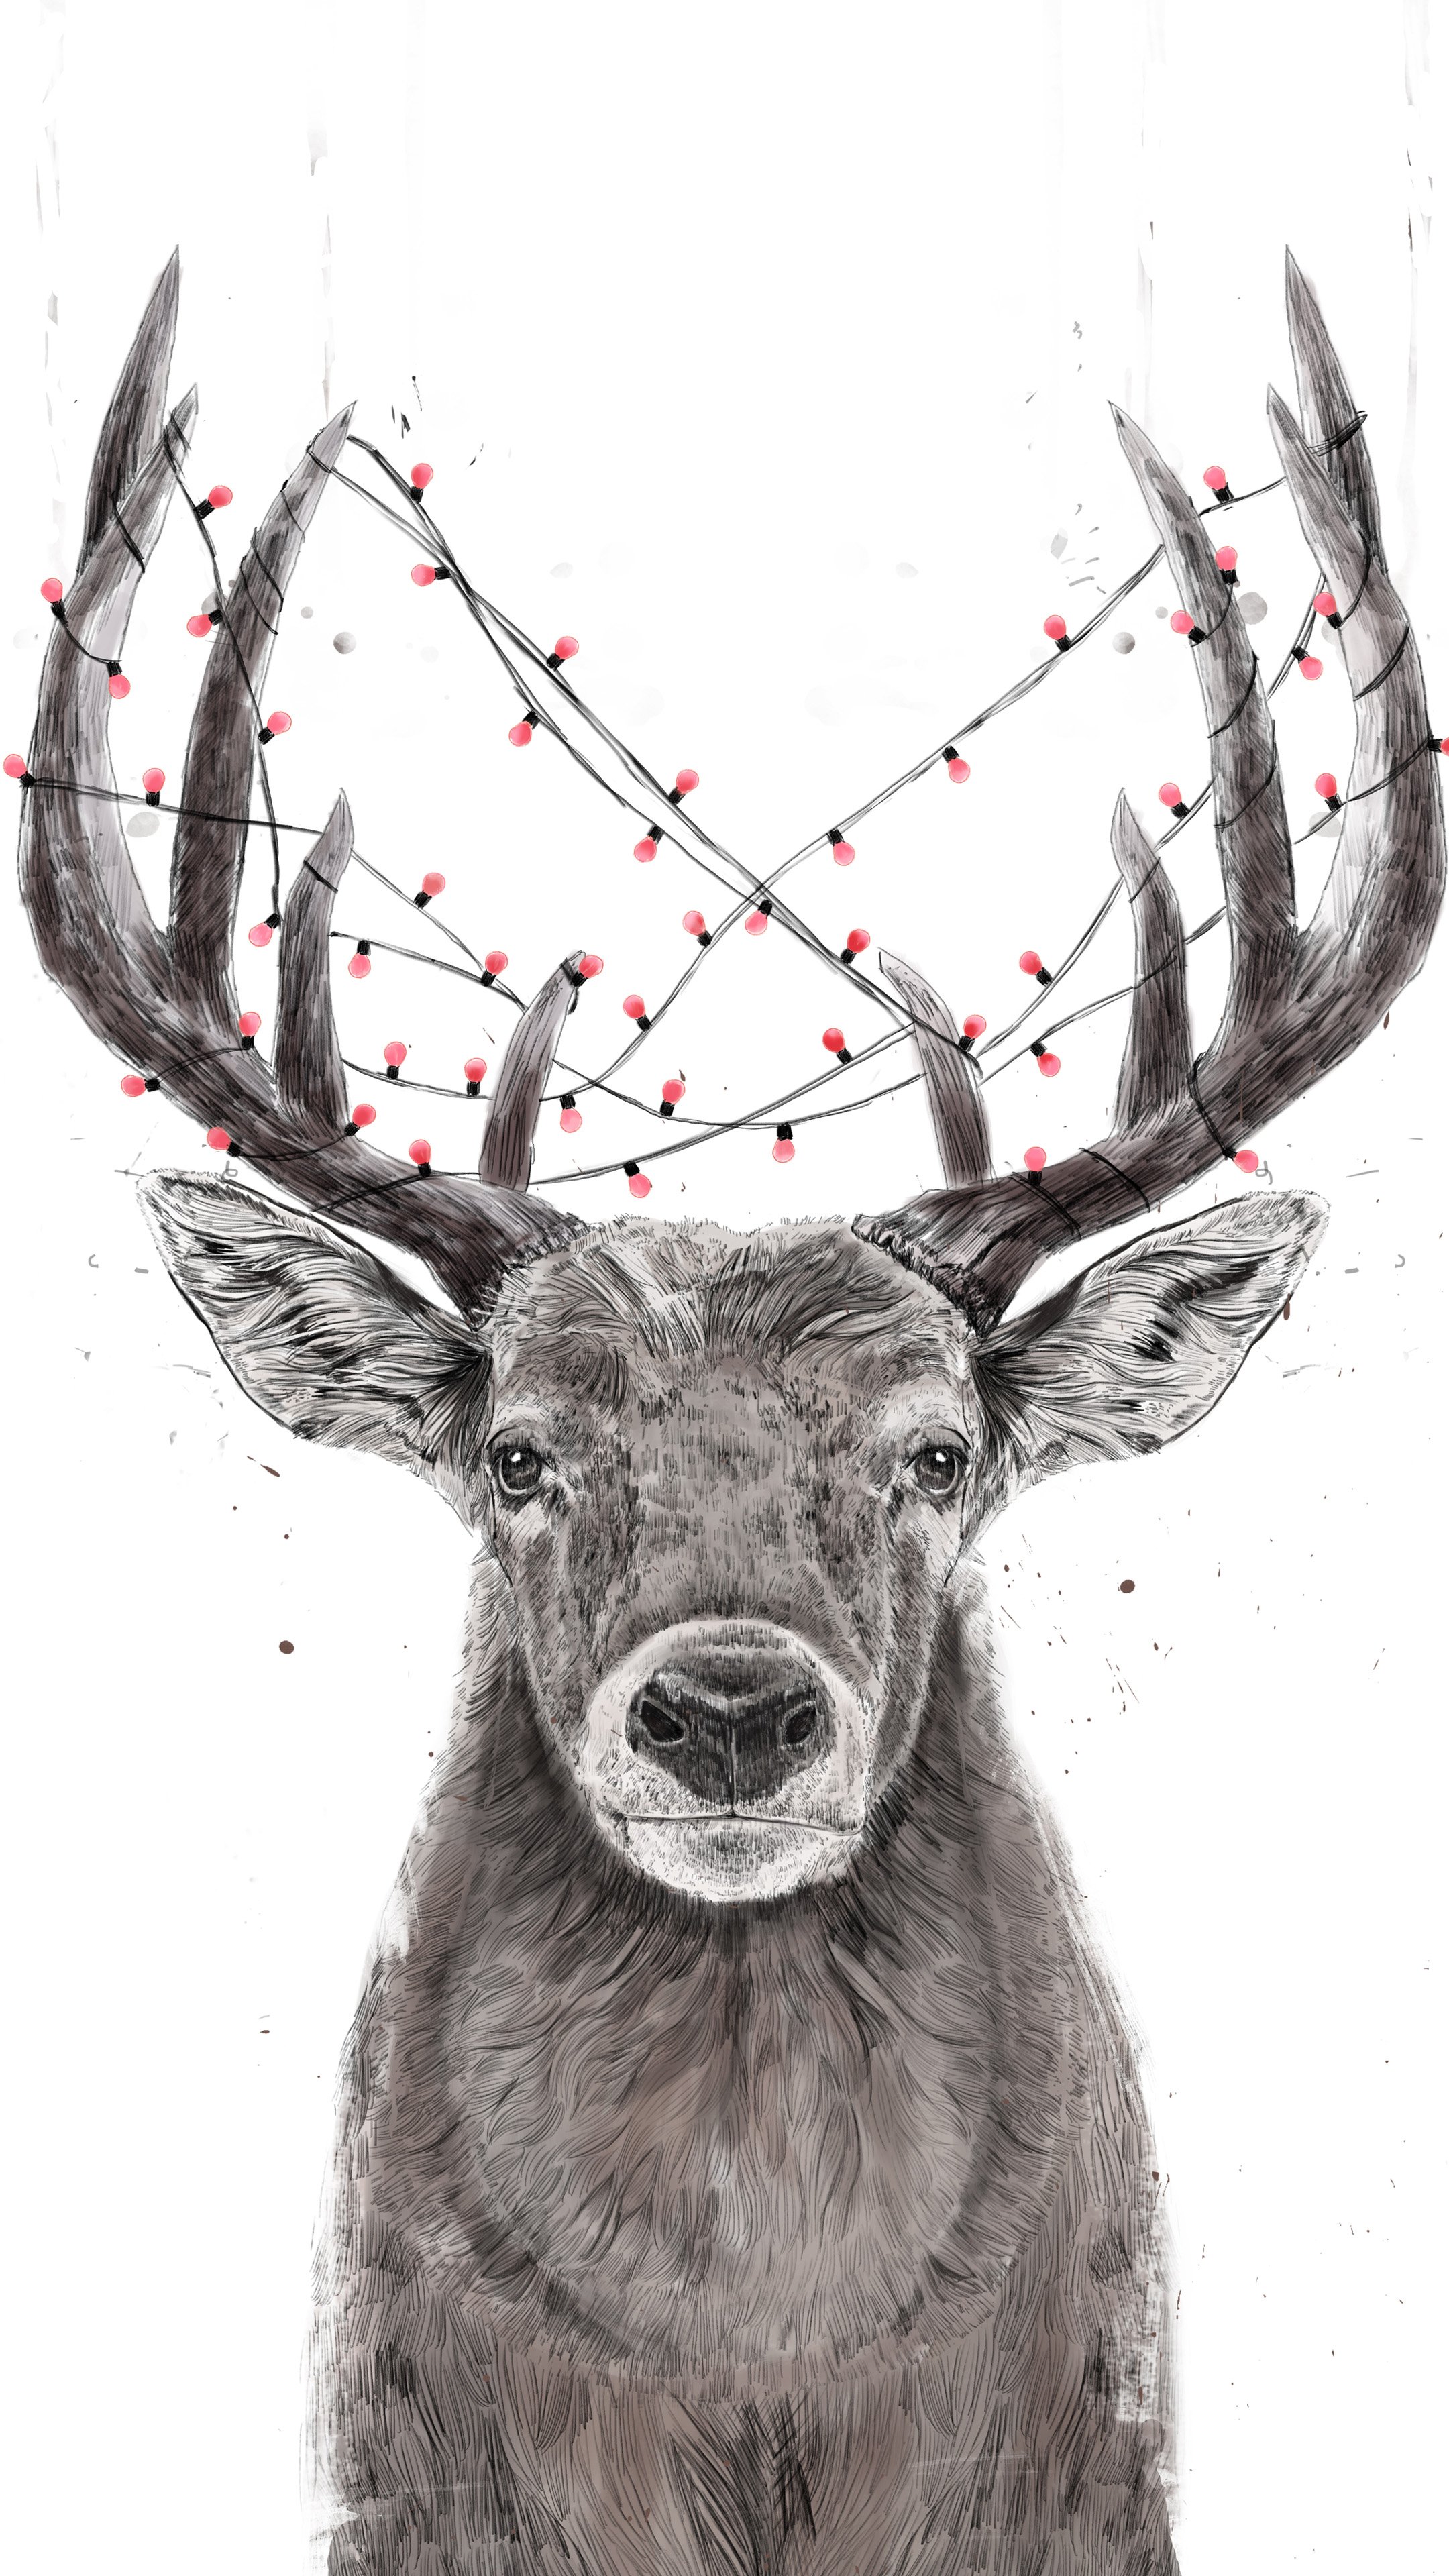 Premium Vector  Christmas wallpaper with golden christmas reindeer frame